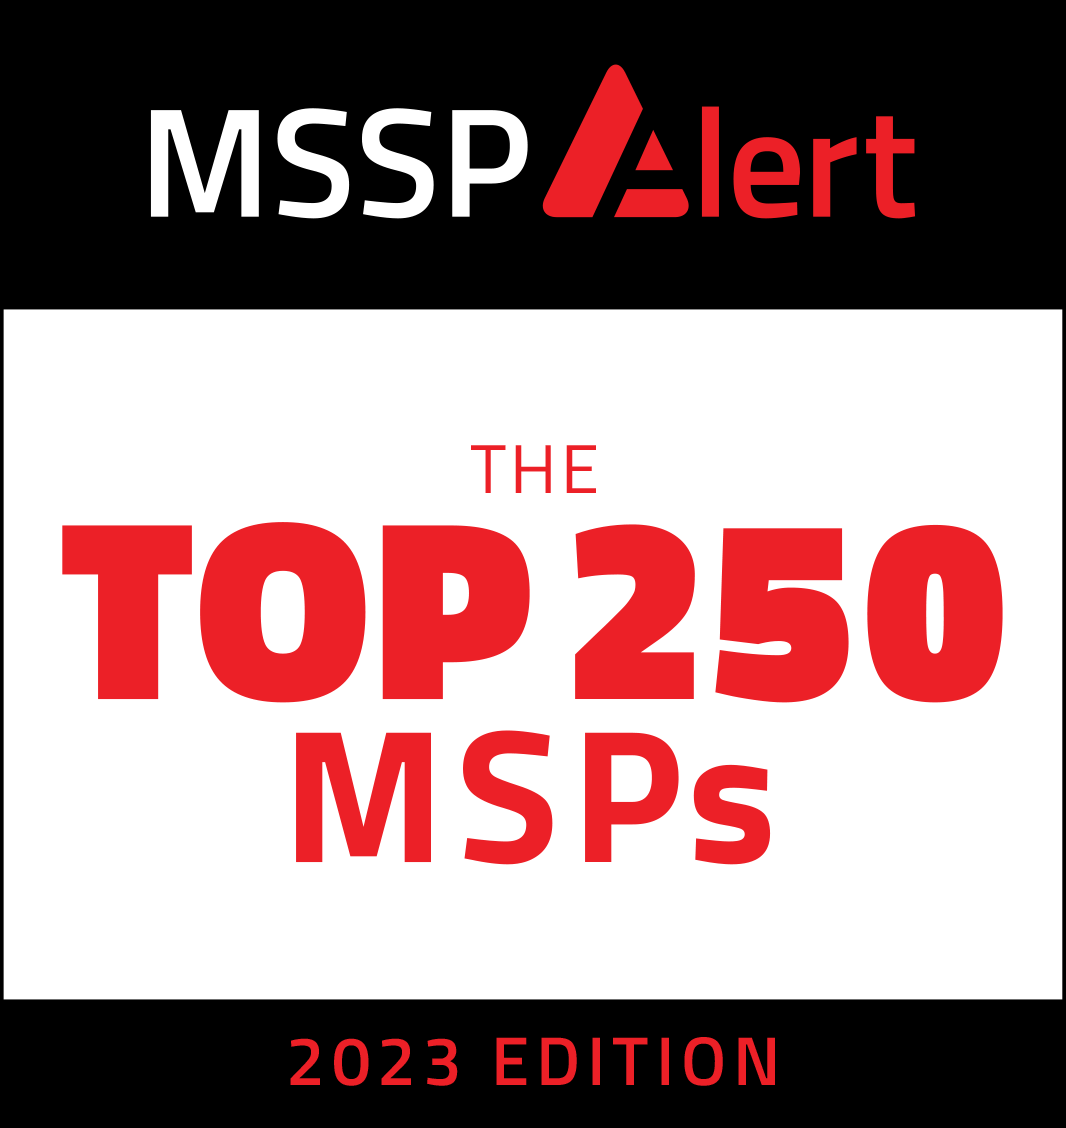 MSSP Alert - the top 250 MSPs